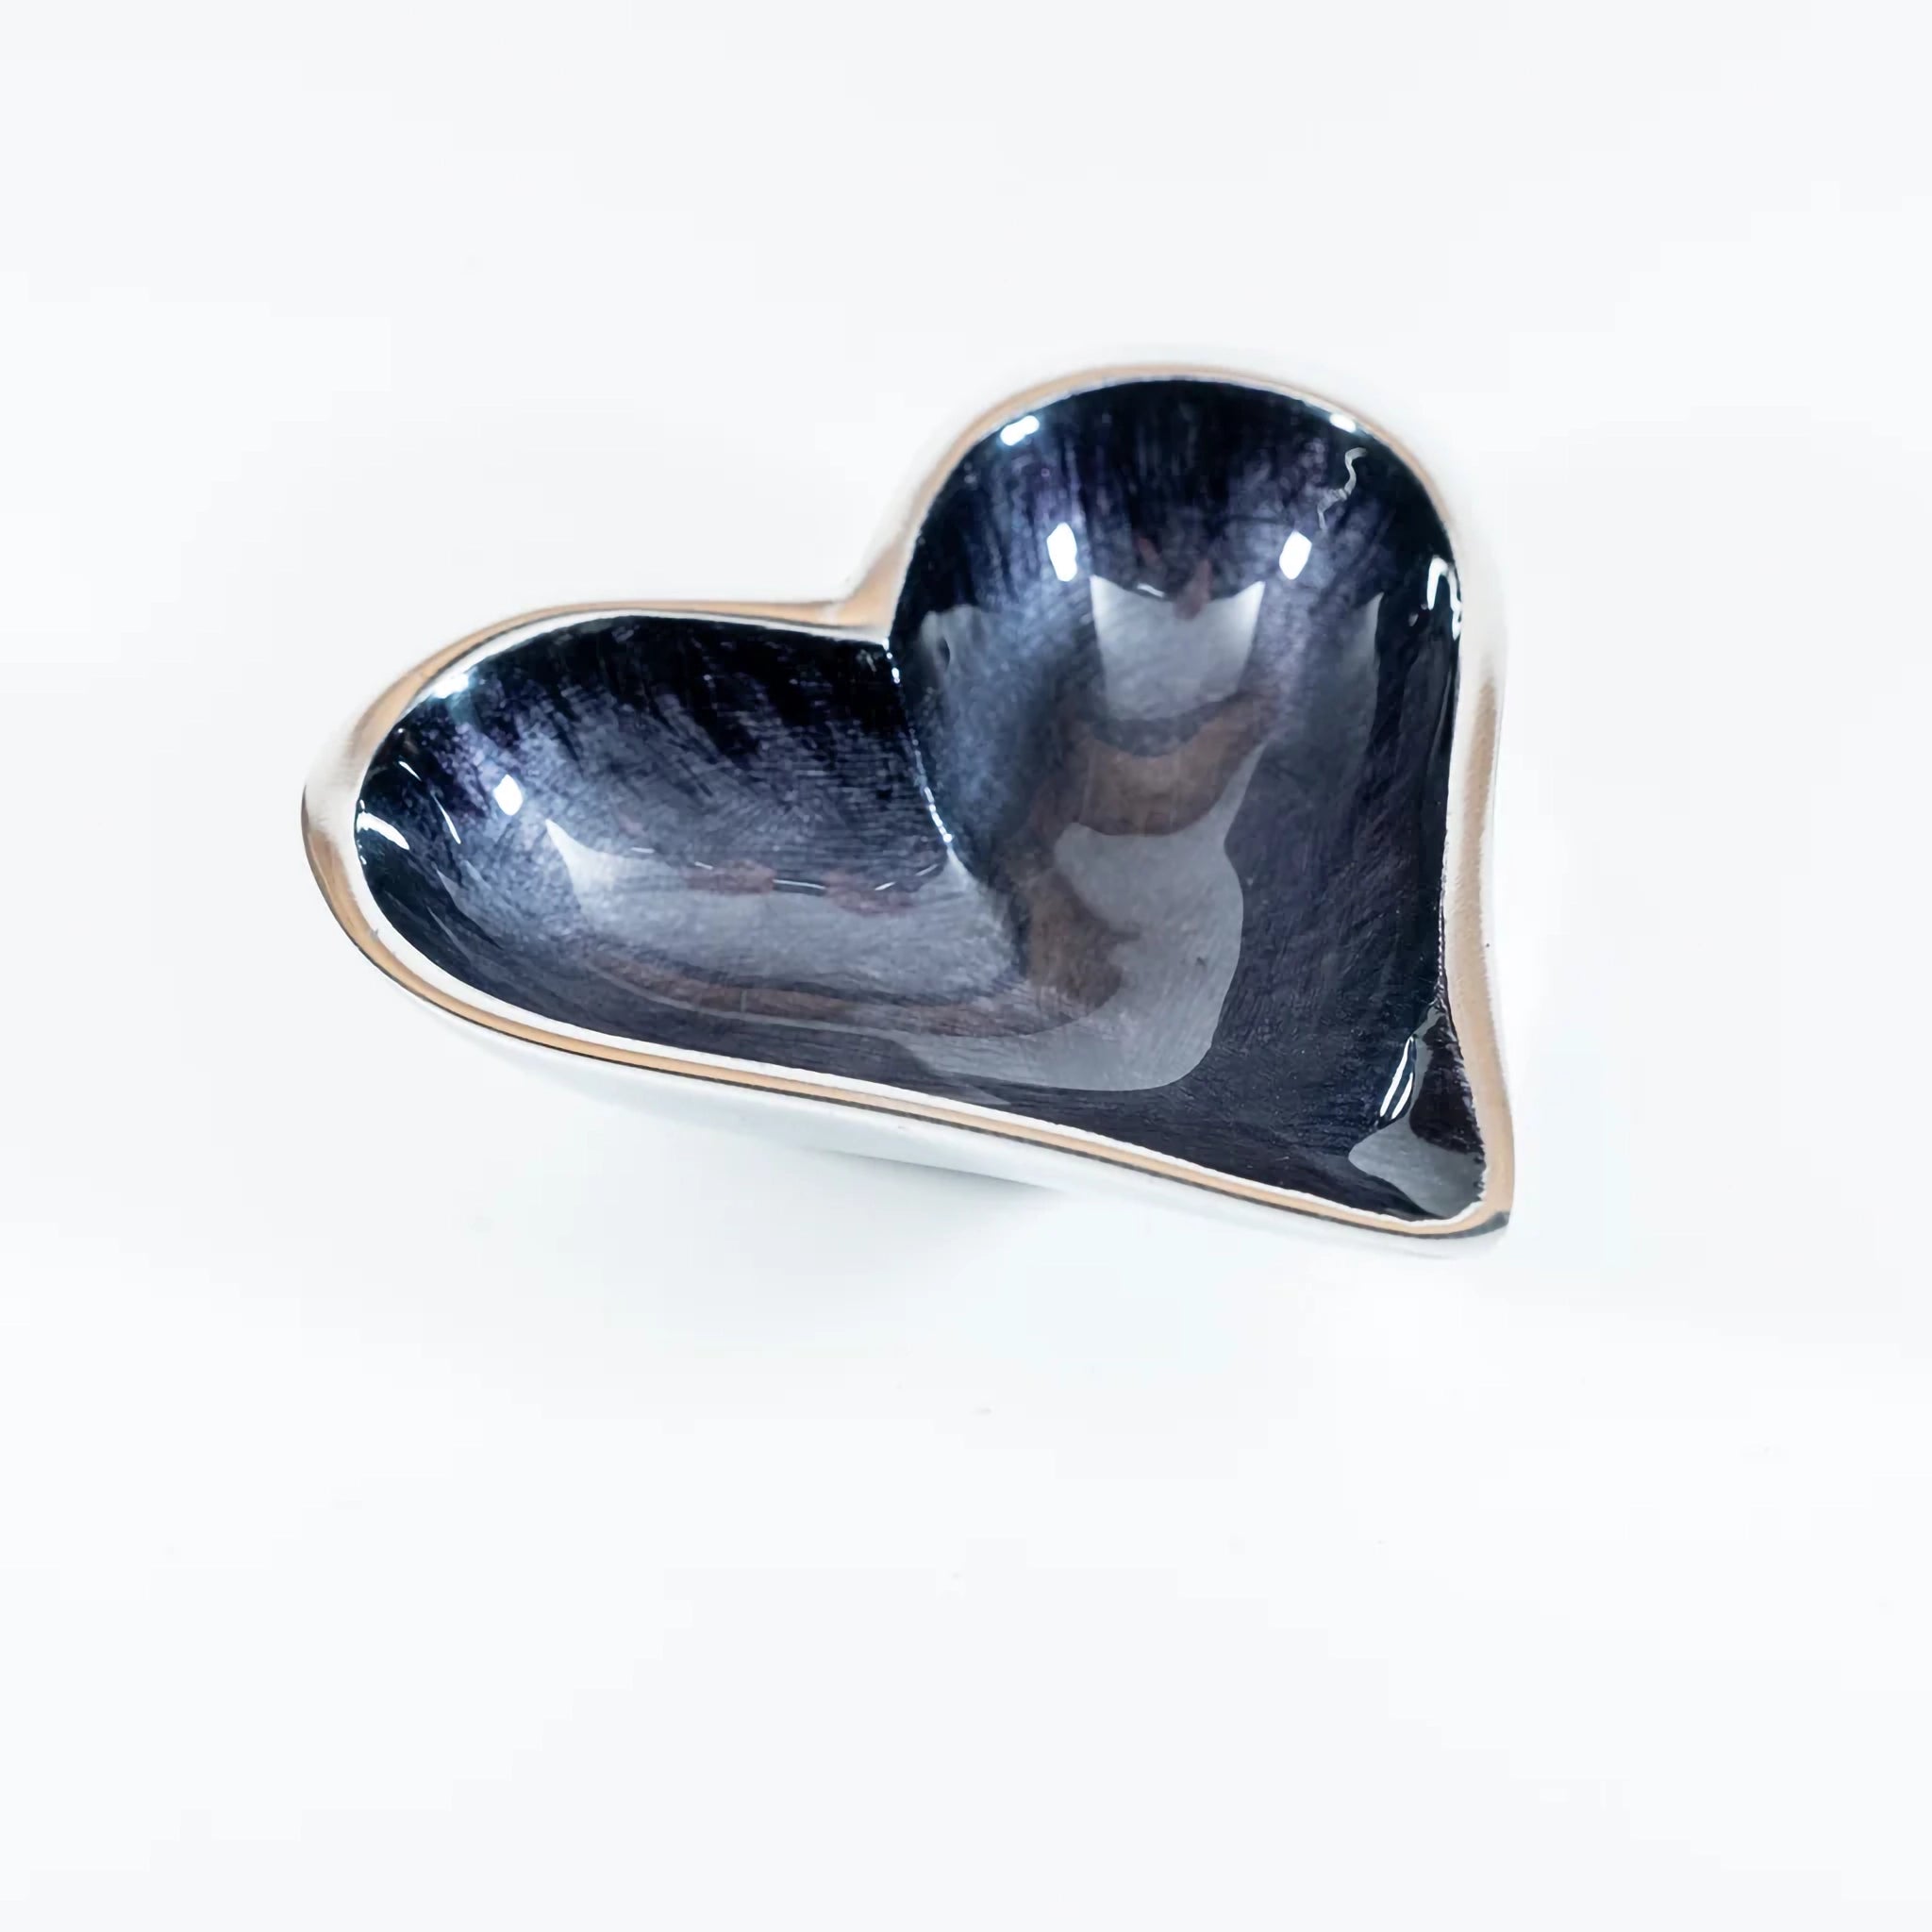 A silver aluminium heart shaped dish with black ombre enamel inside